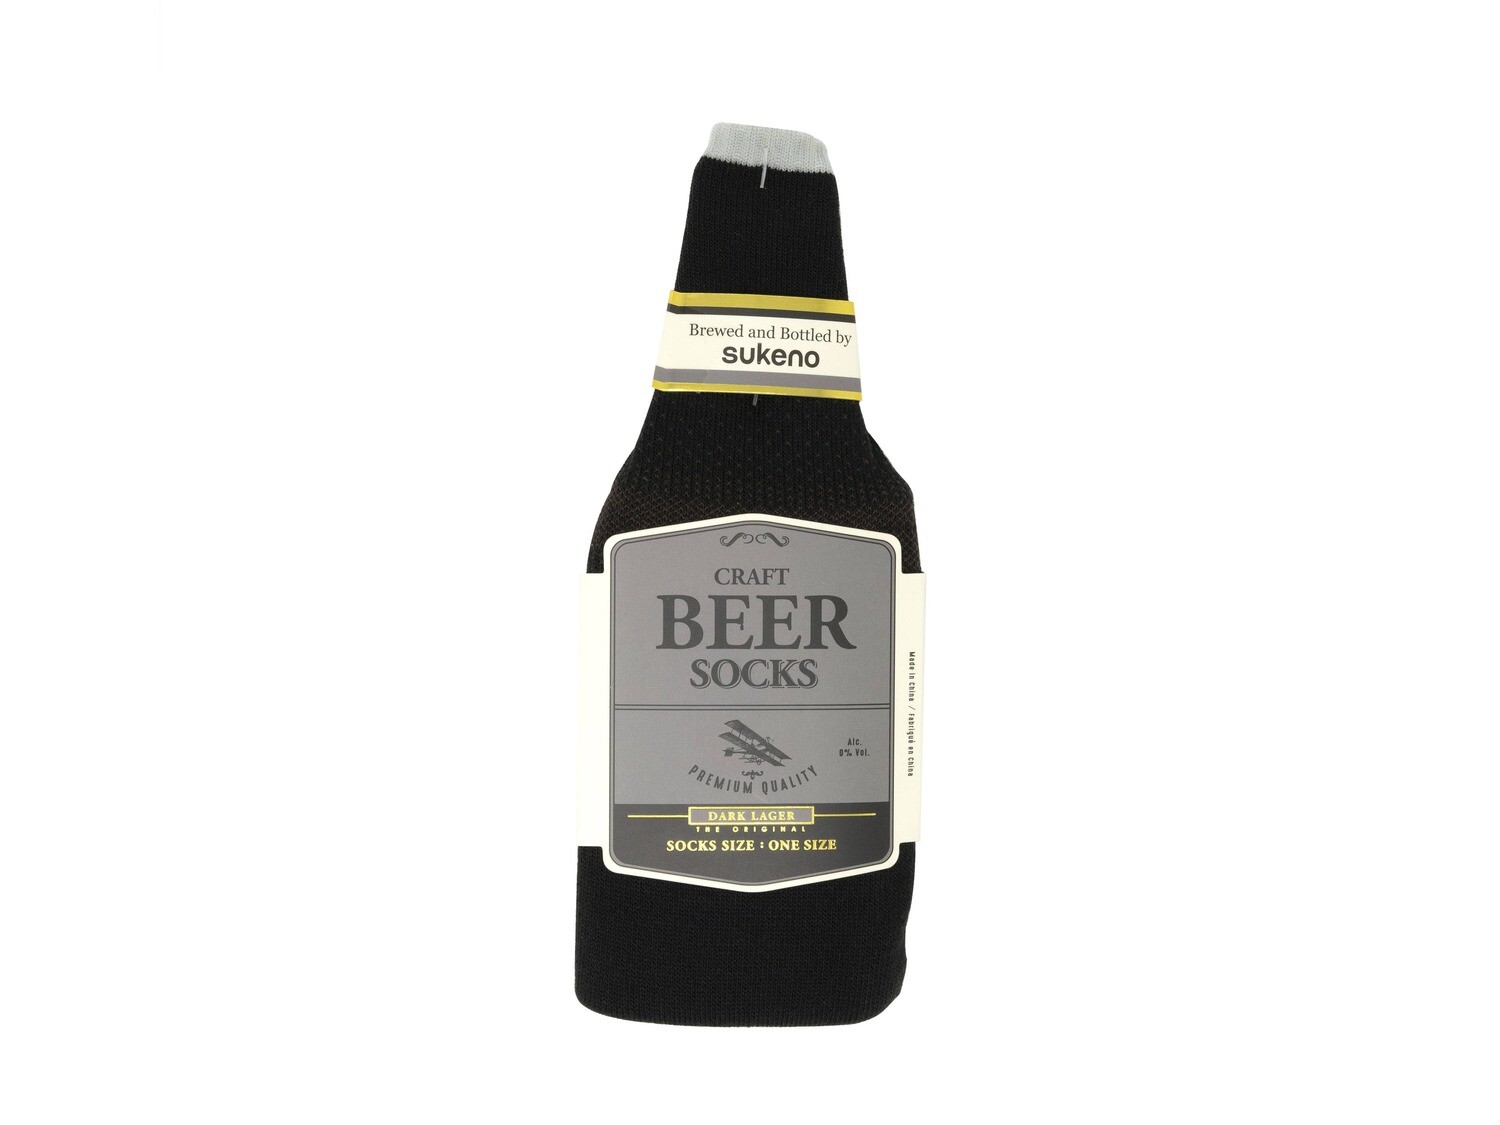 Dark Lager Craft Beer Socks